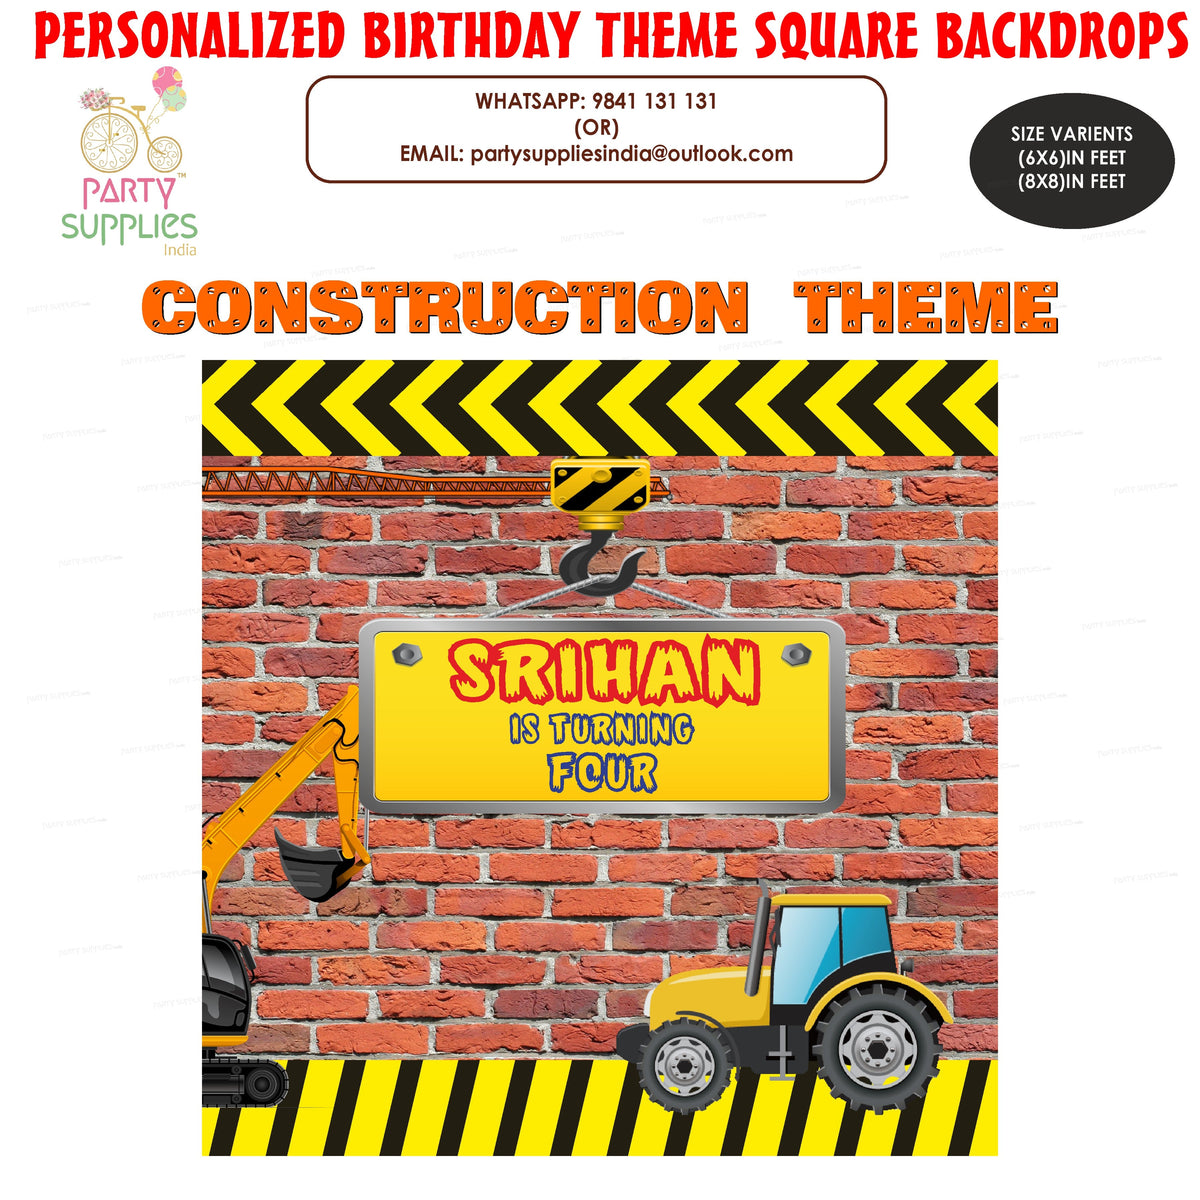 PSI Construction Theme Square Backdrop